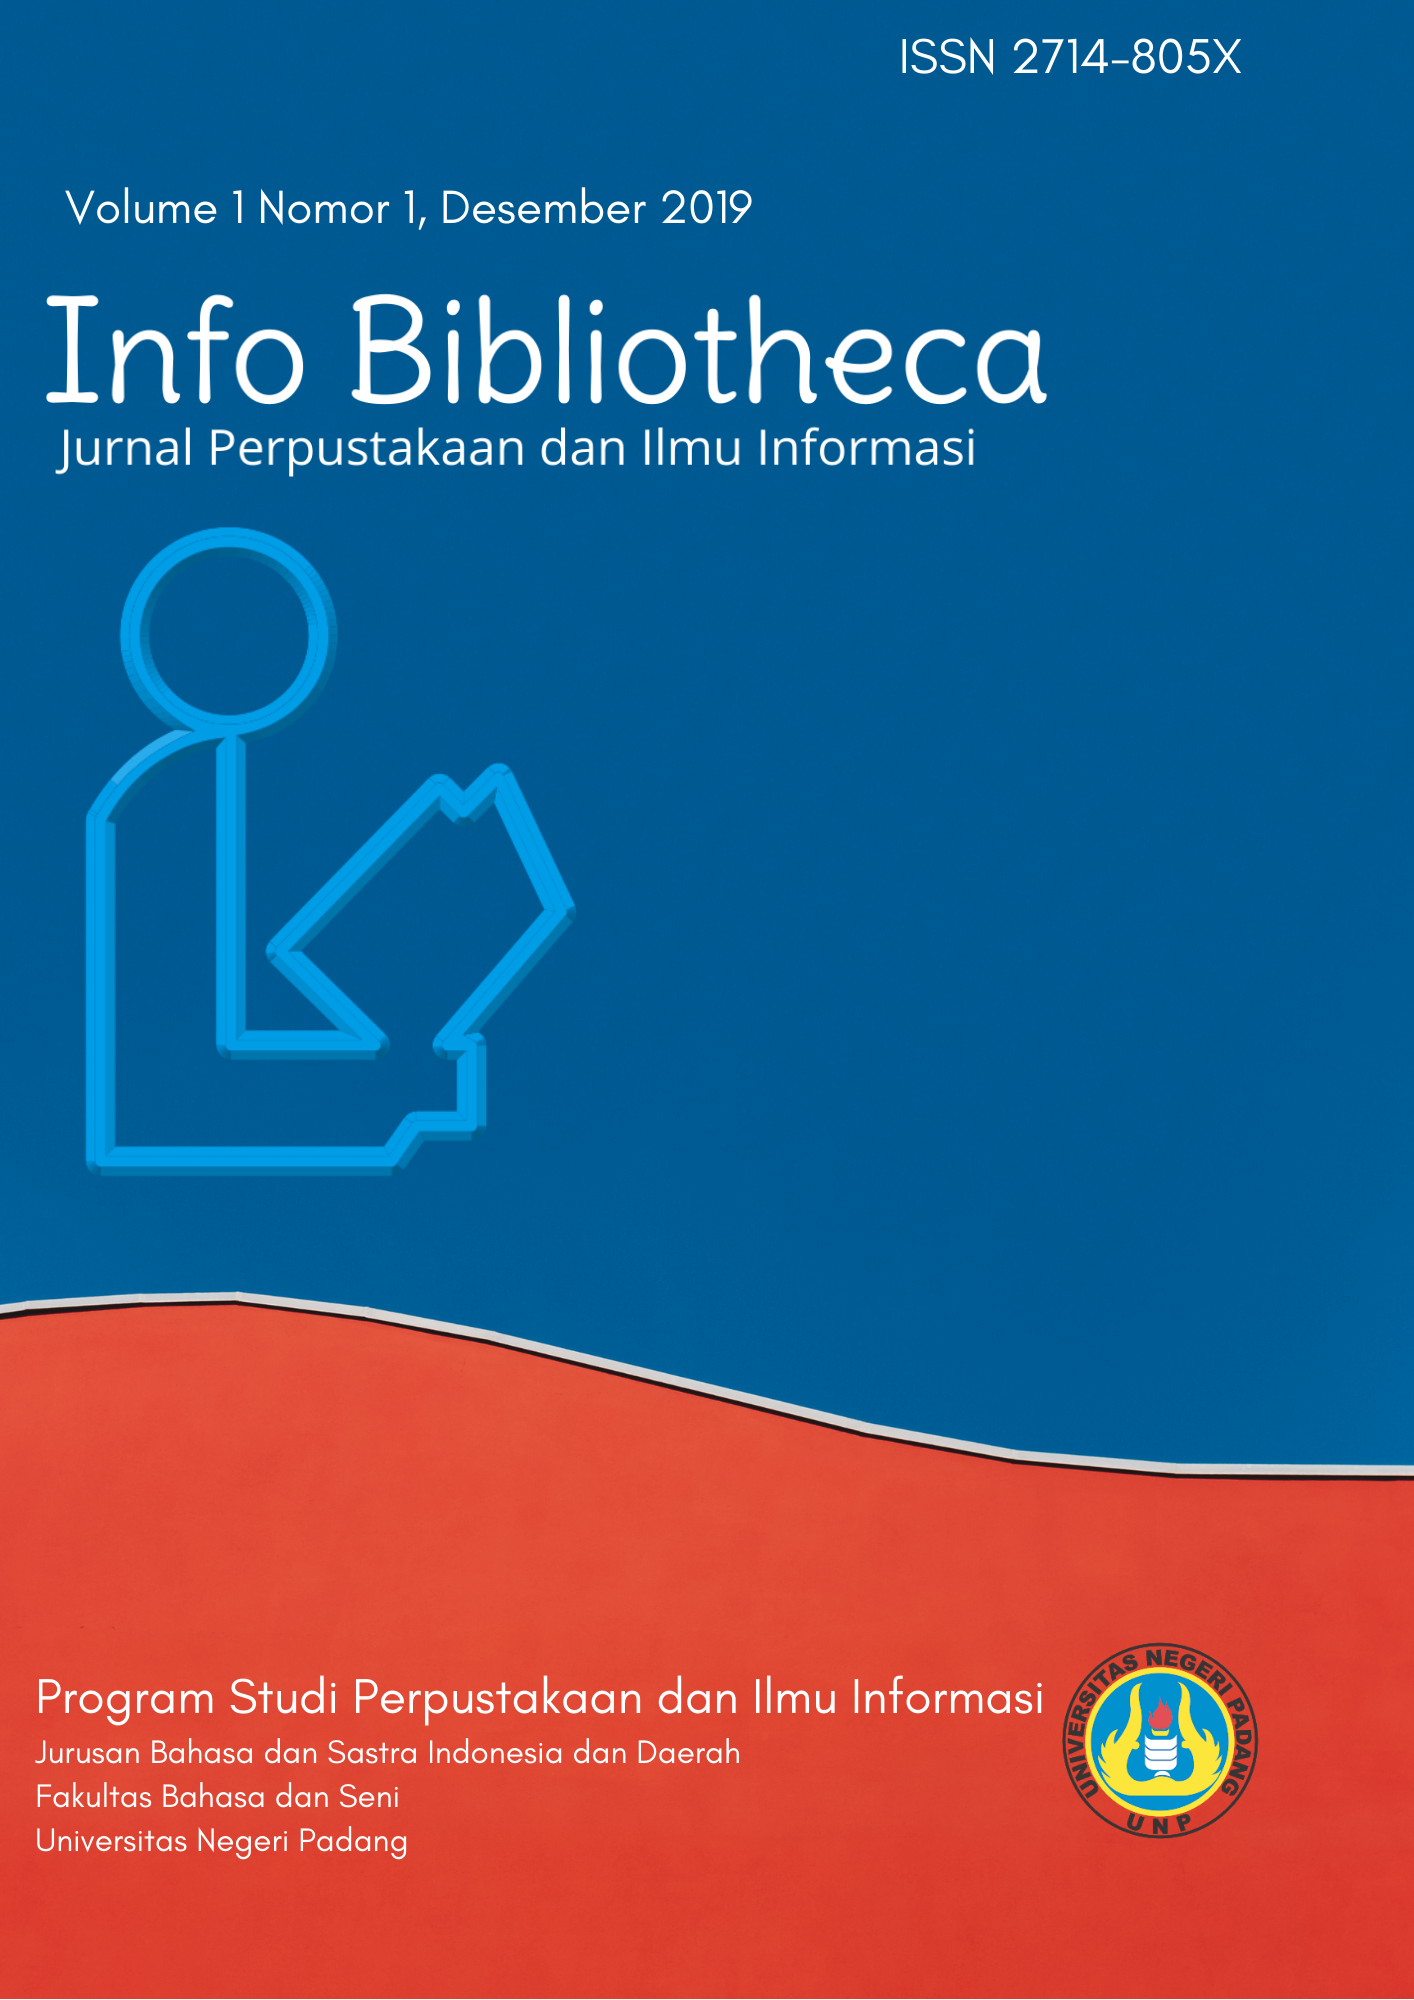 					View Vol. 2 No. 1 (2020): Info Bibliotheca: Jurnal Perpustakaan dan Ilmu Informasi
				